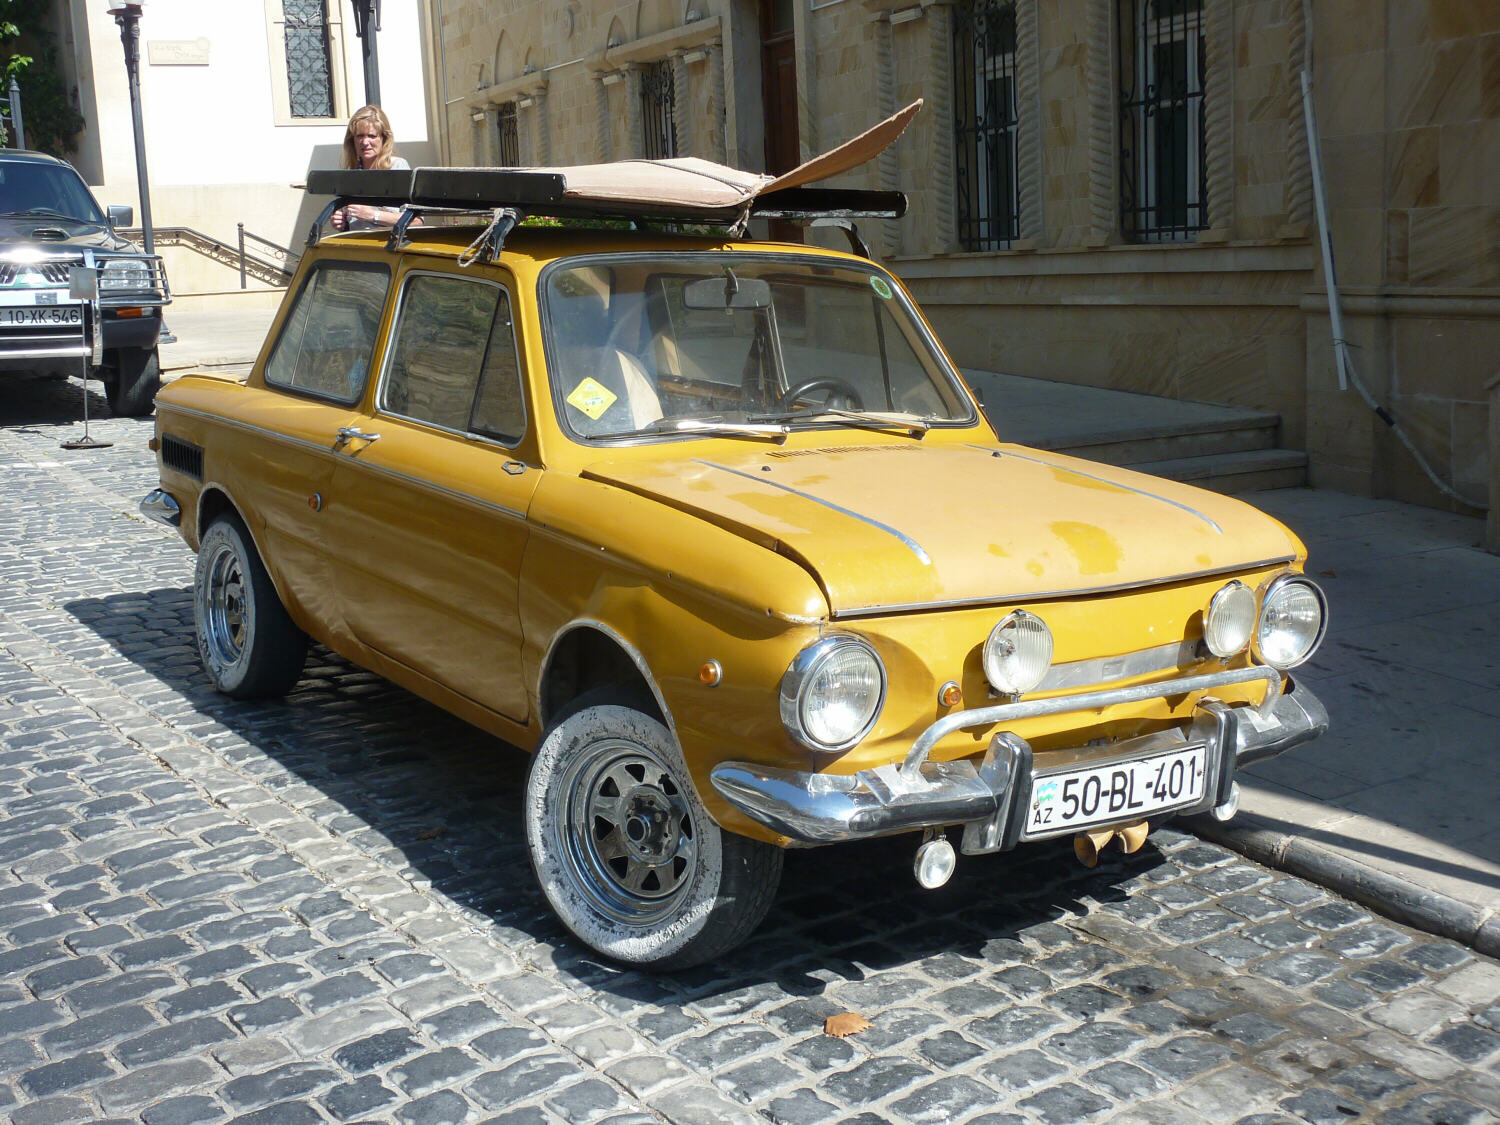 A yellow Soviet-style Lada in Baku, Azerbaijan